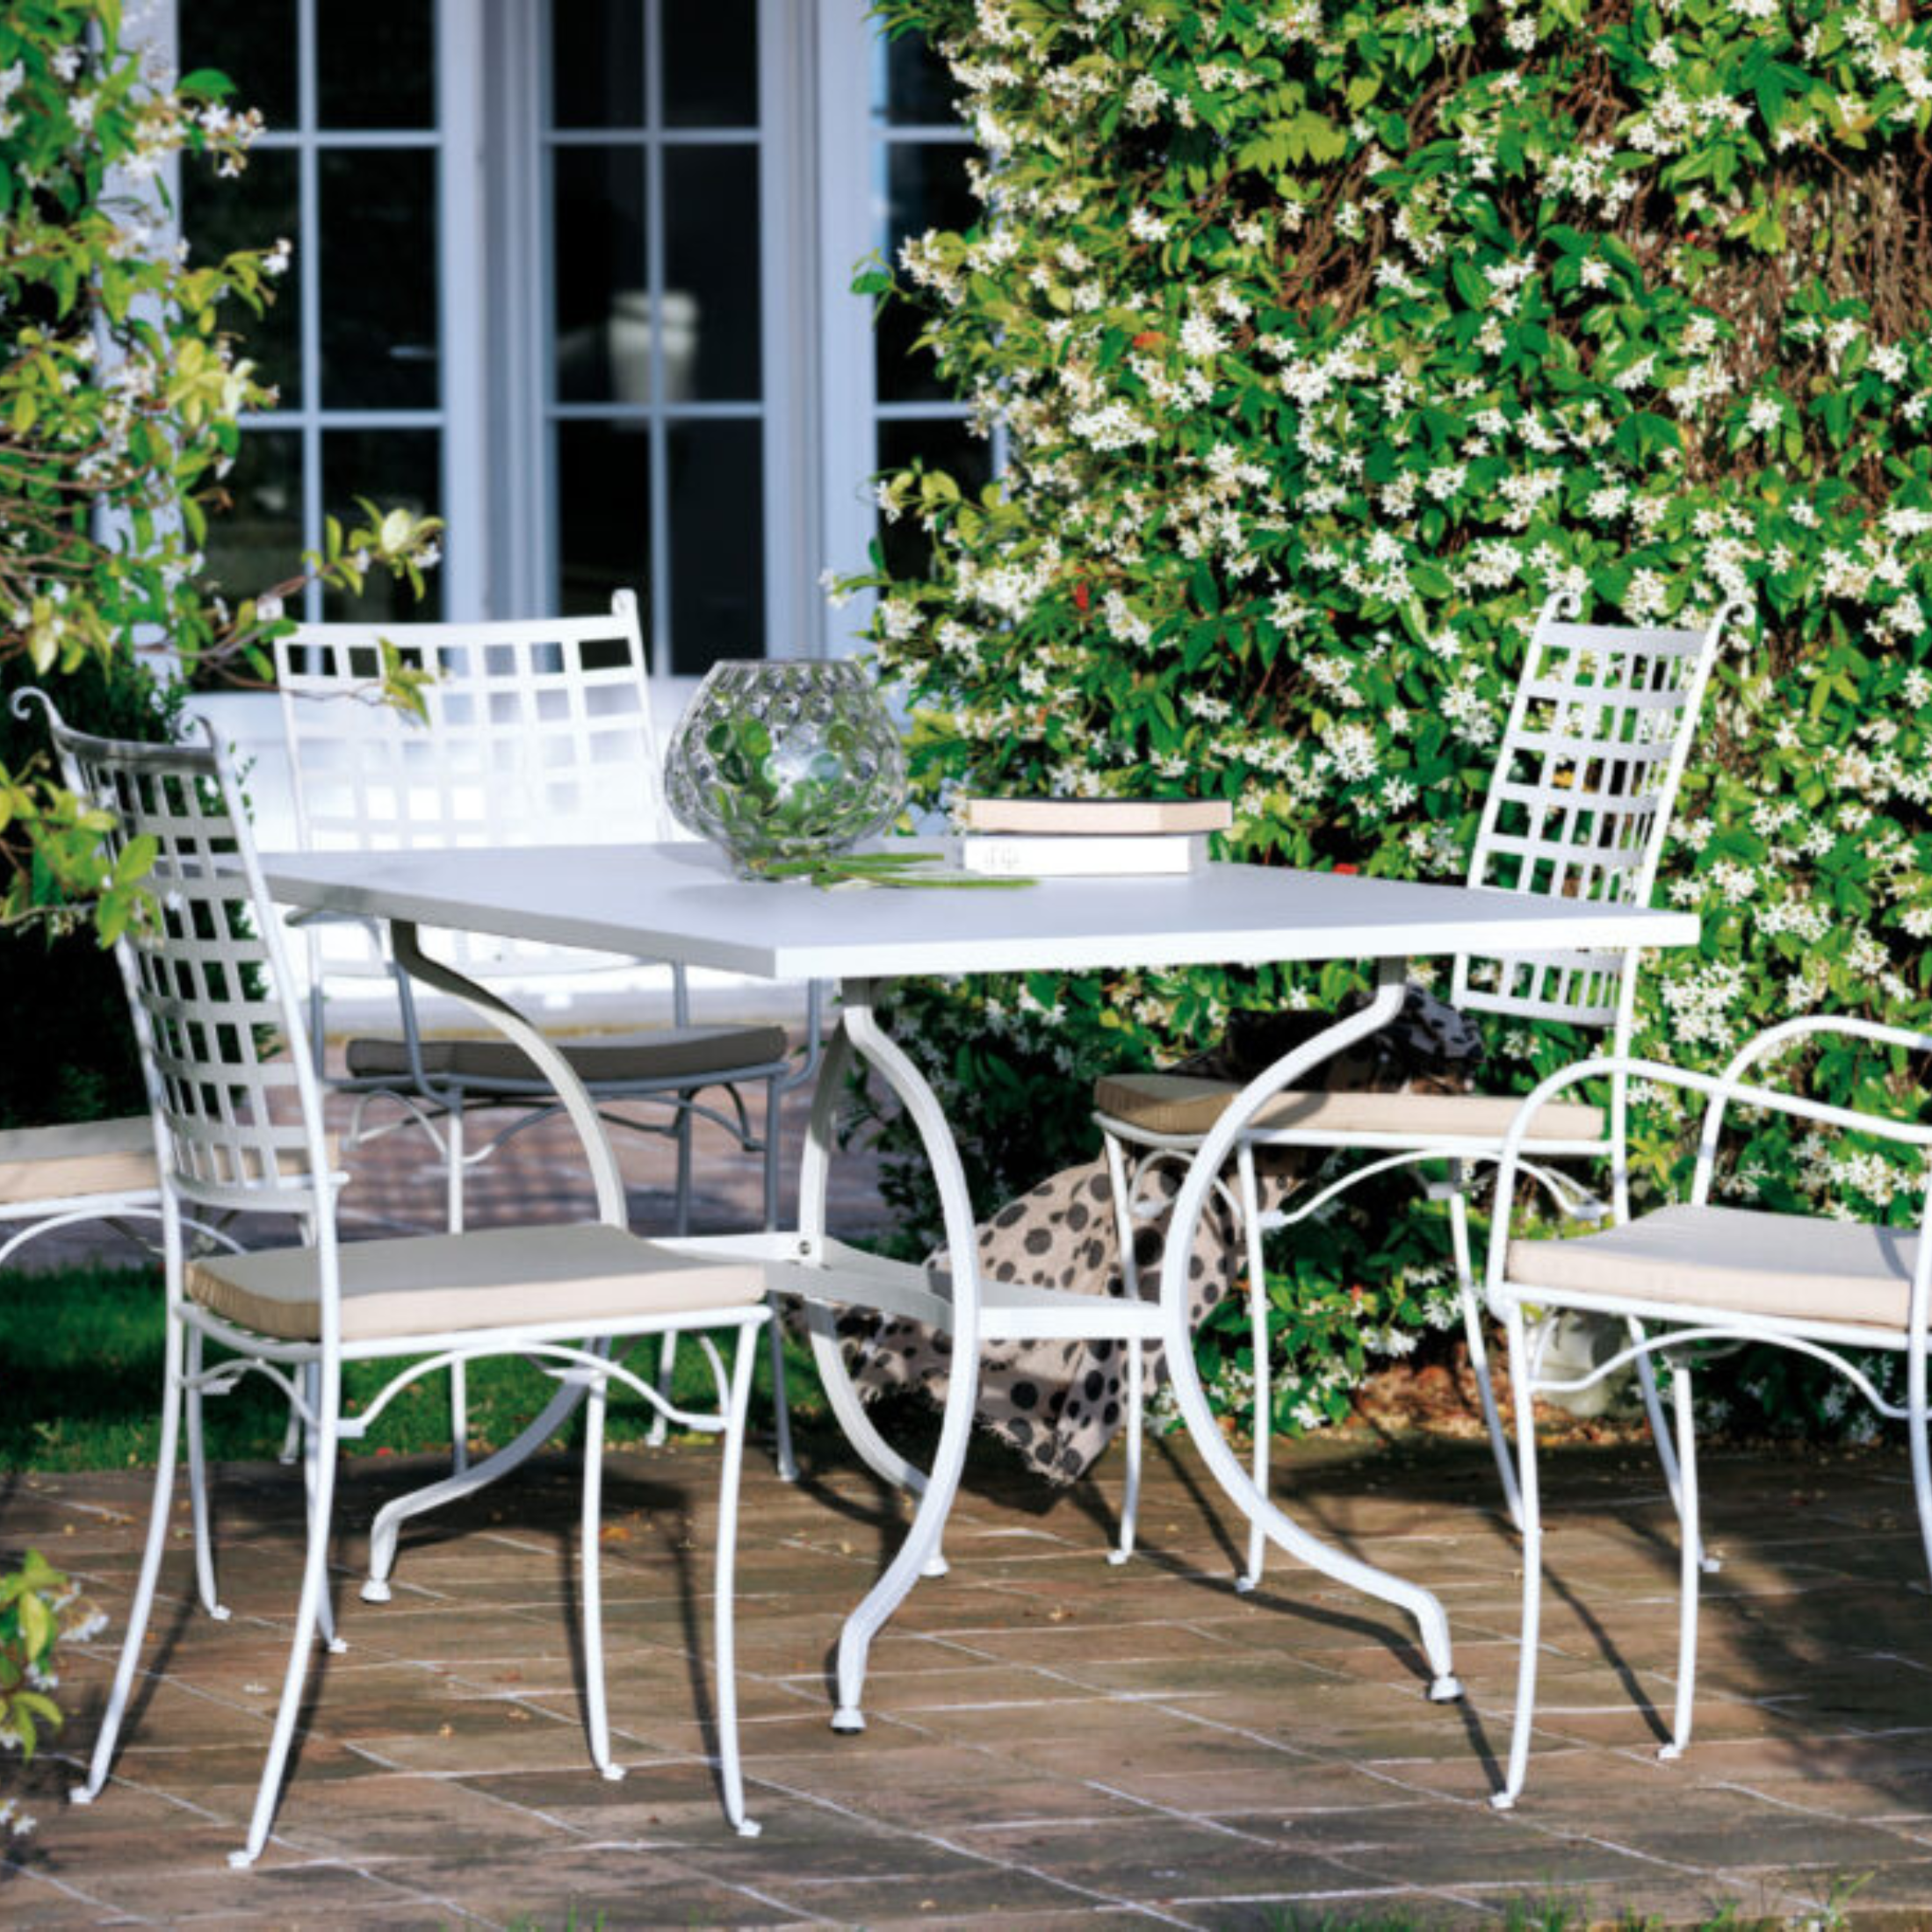 Set di sedie moderne in metallo verniciato "Tosca" da giardino impilabili cm 45x58 100h